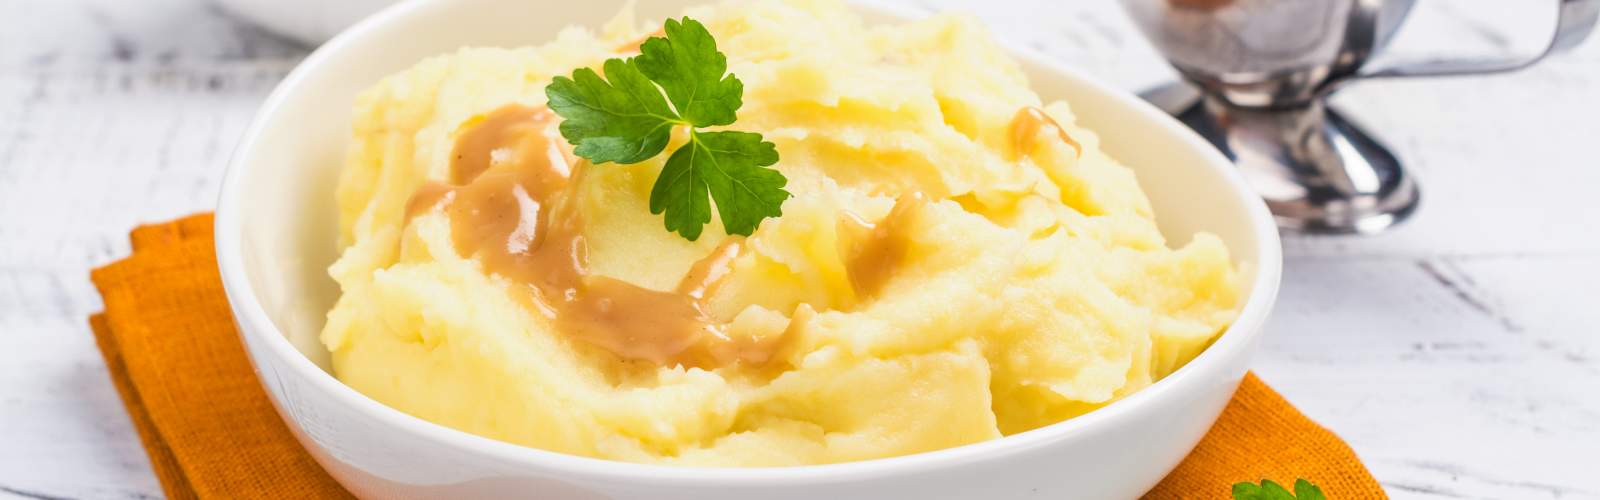 Creamy Mashed Cauliflower & Gravy | Keto & Low Carb Version